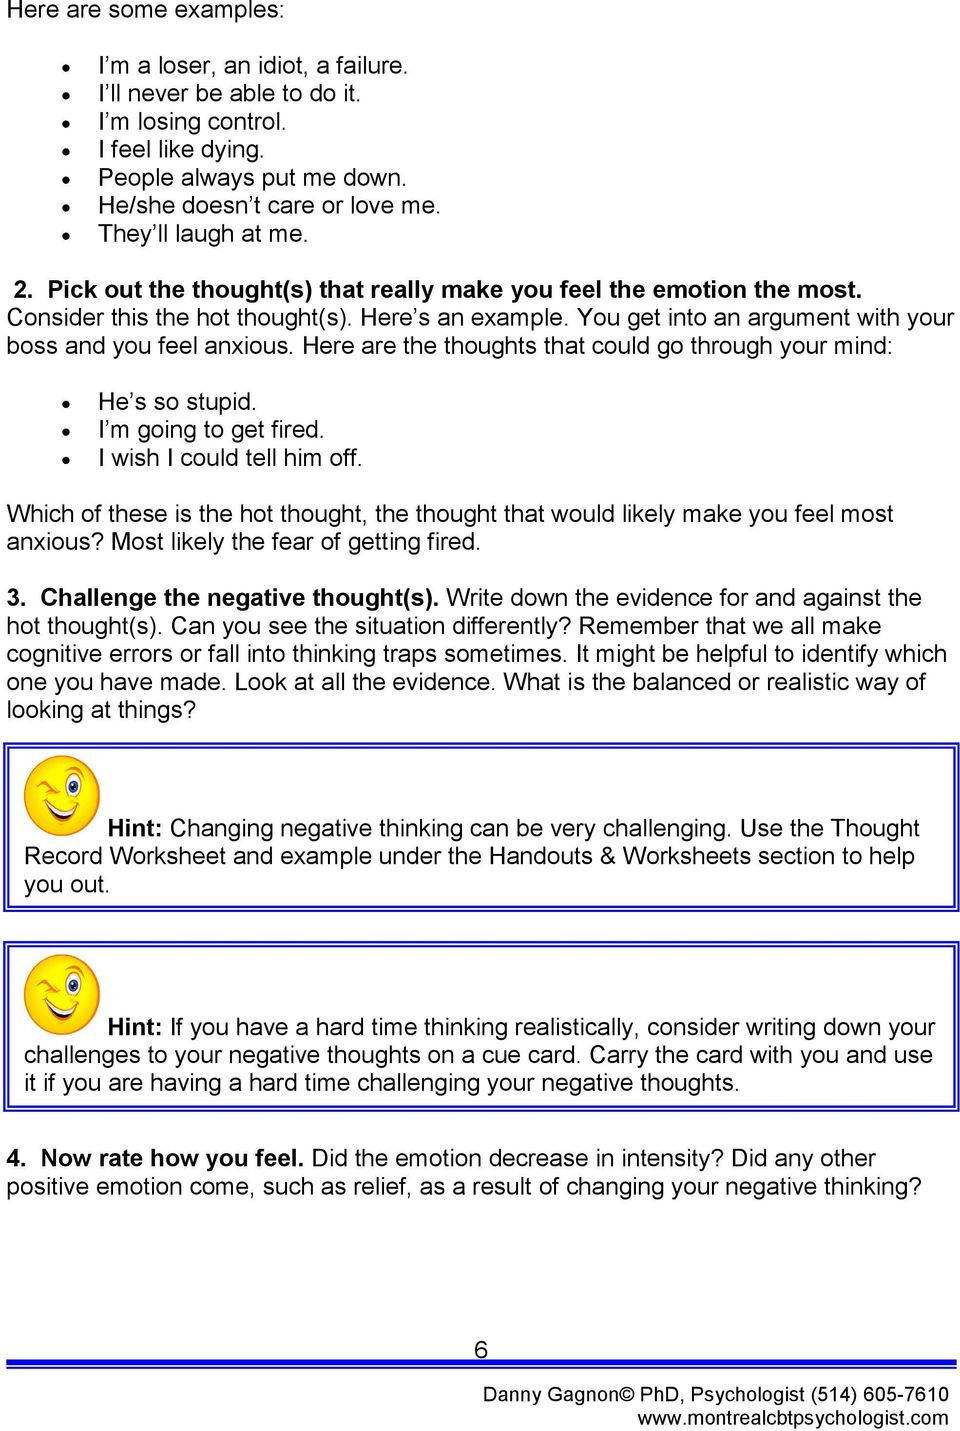 How To Change Negative Thinking  Pdf